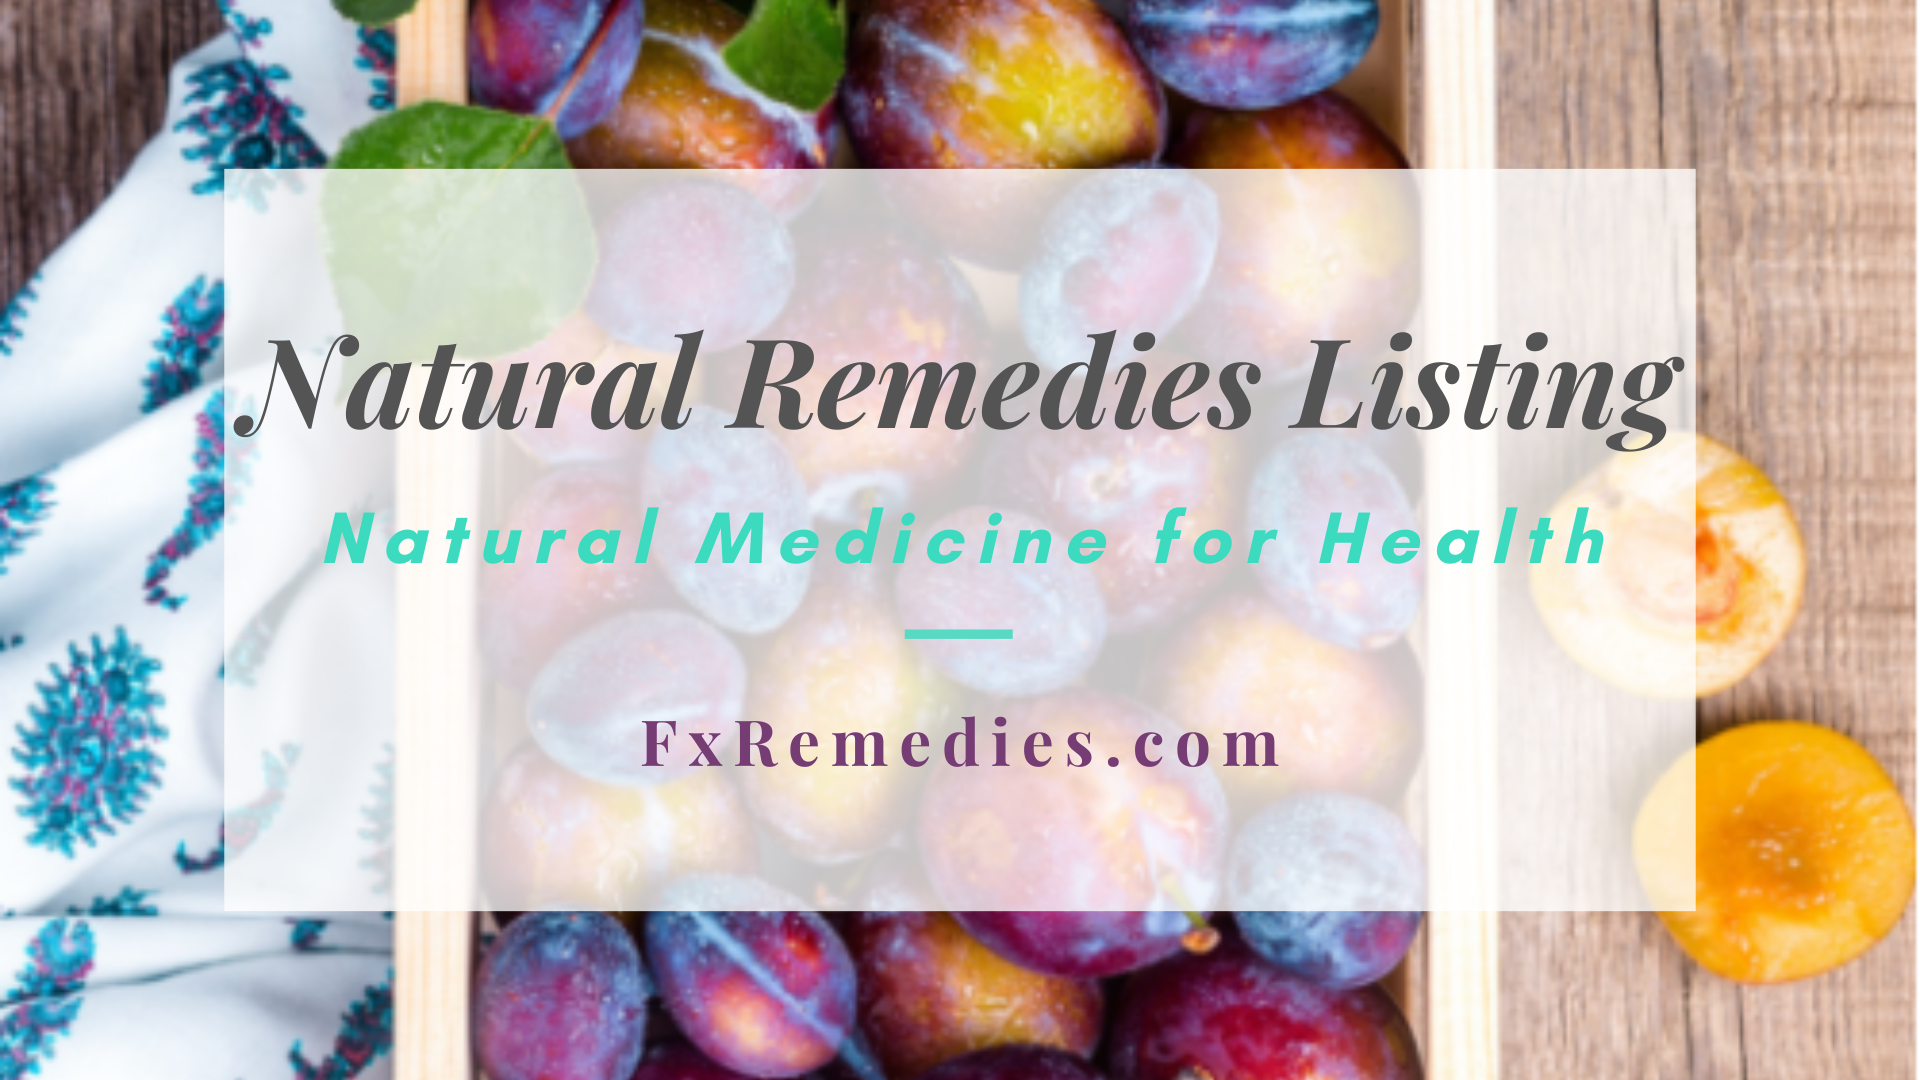 Natural Remedies and Natural Medicine